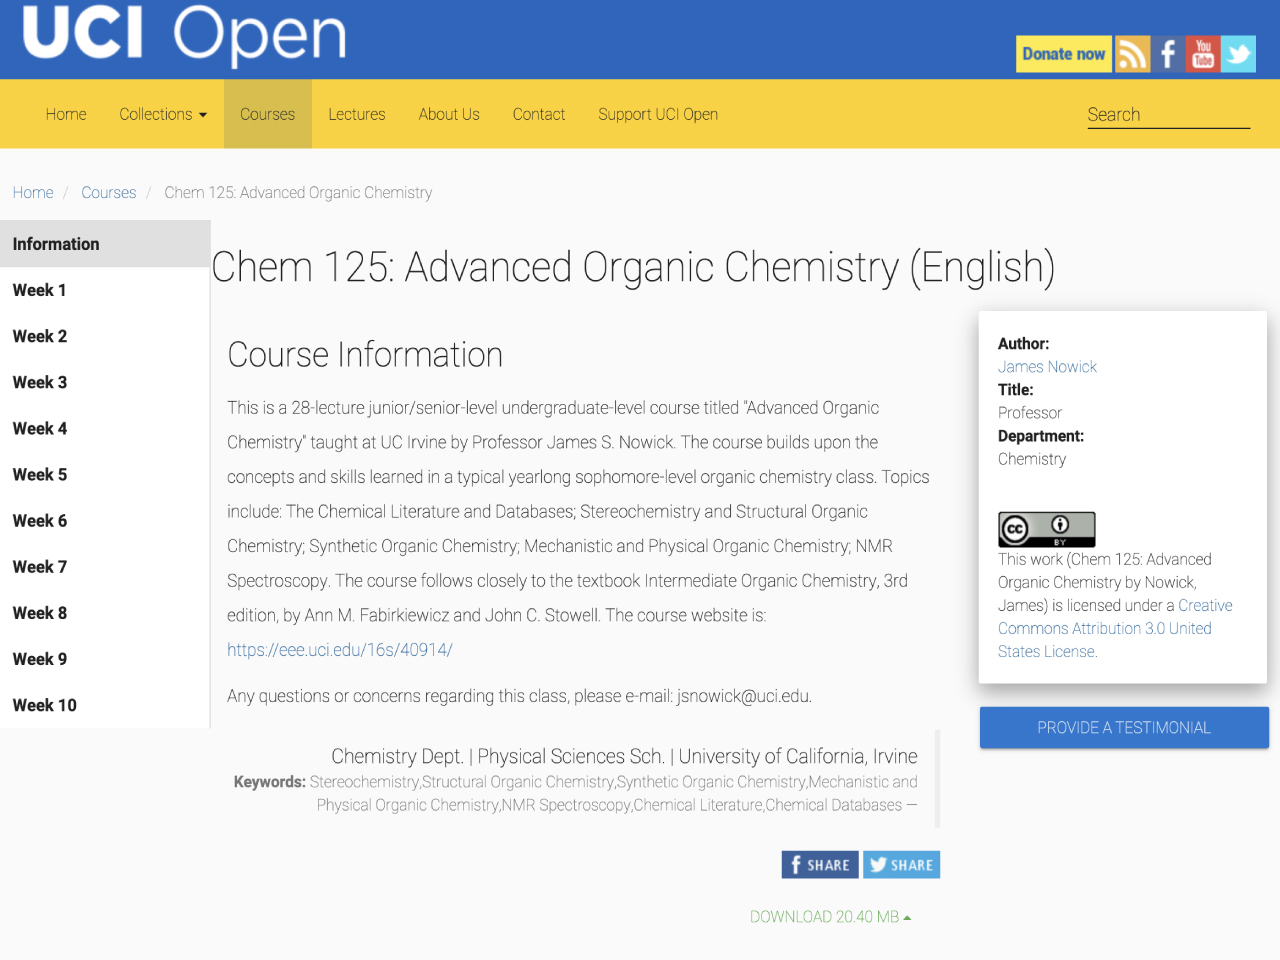 Chem 125: Advanced Organic Chemistry